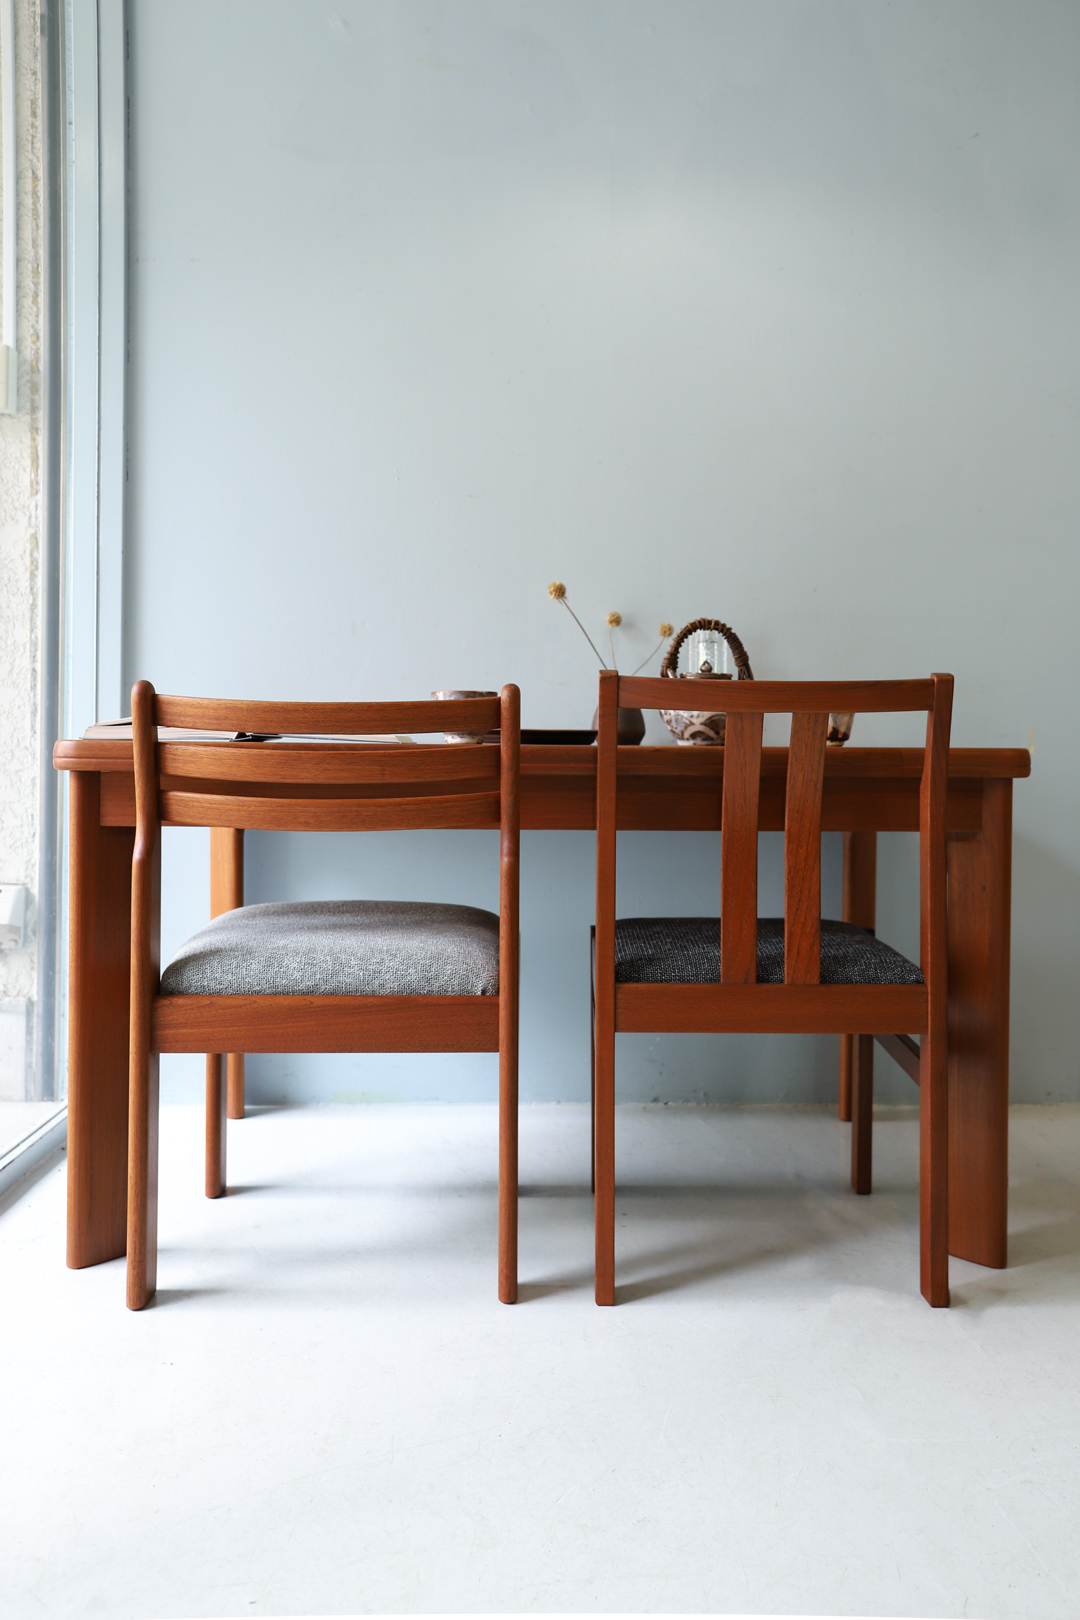 Japan Vintage Teakwood Dining Chair/ジャパン ヴィンテージ ダイニングチェア 椅子 チーク材 北欧スタイル モダンデザイン